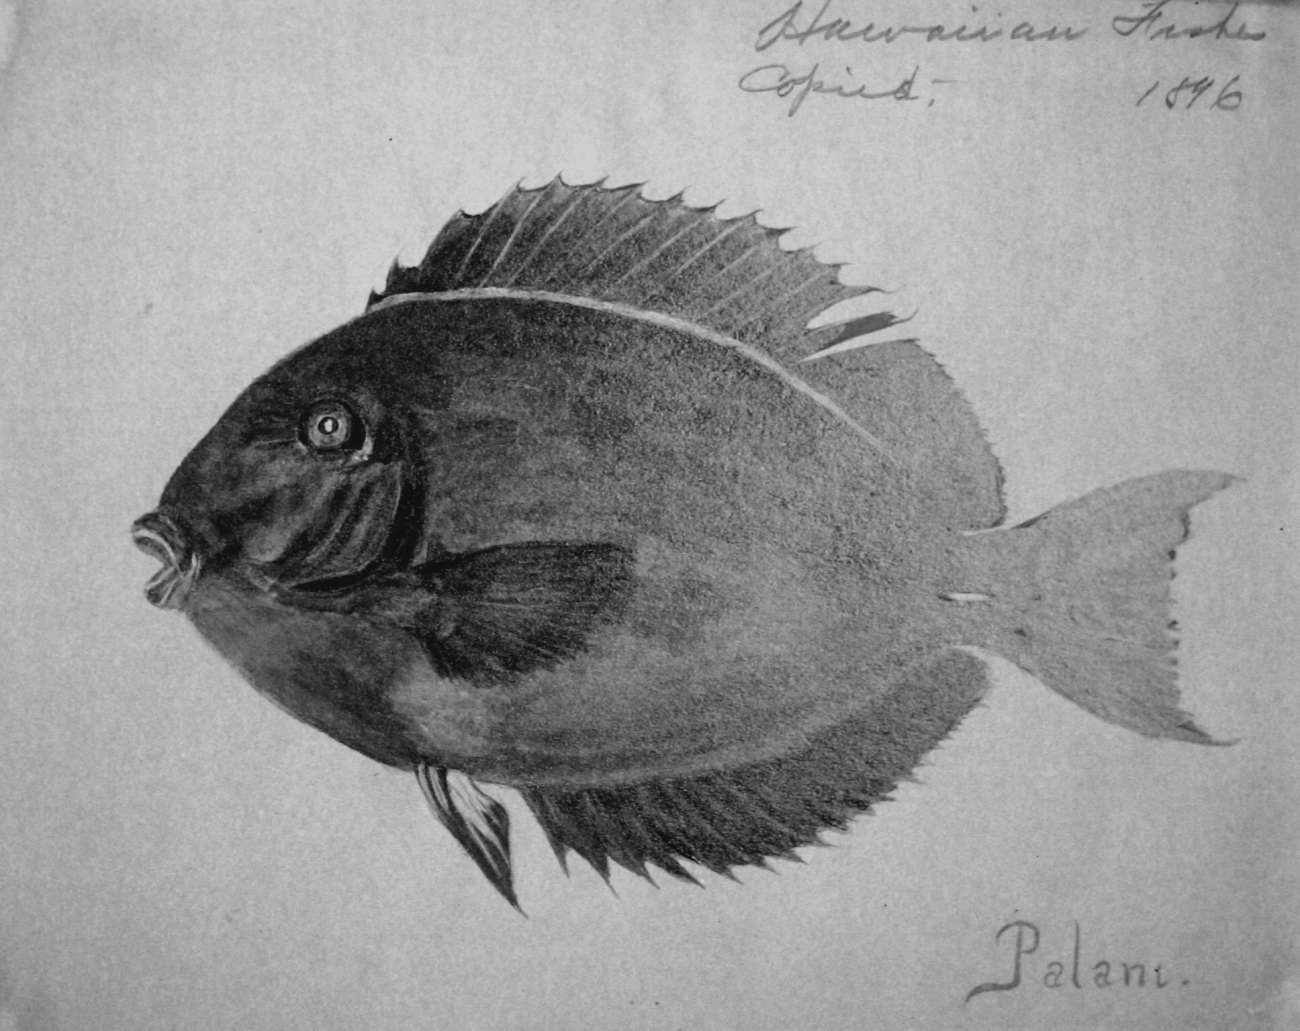 Hawaiian fishes, 1896, Palani